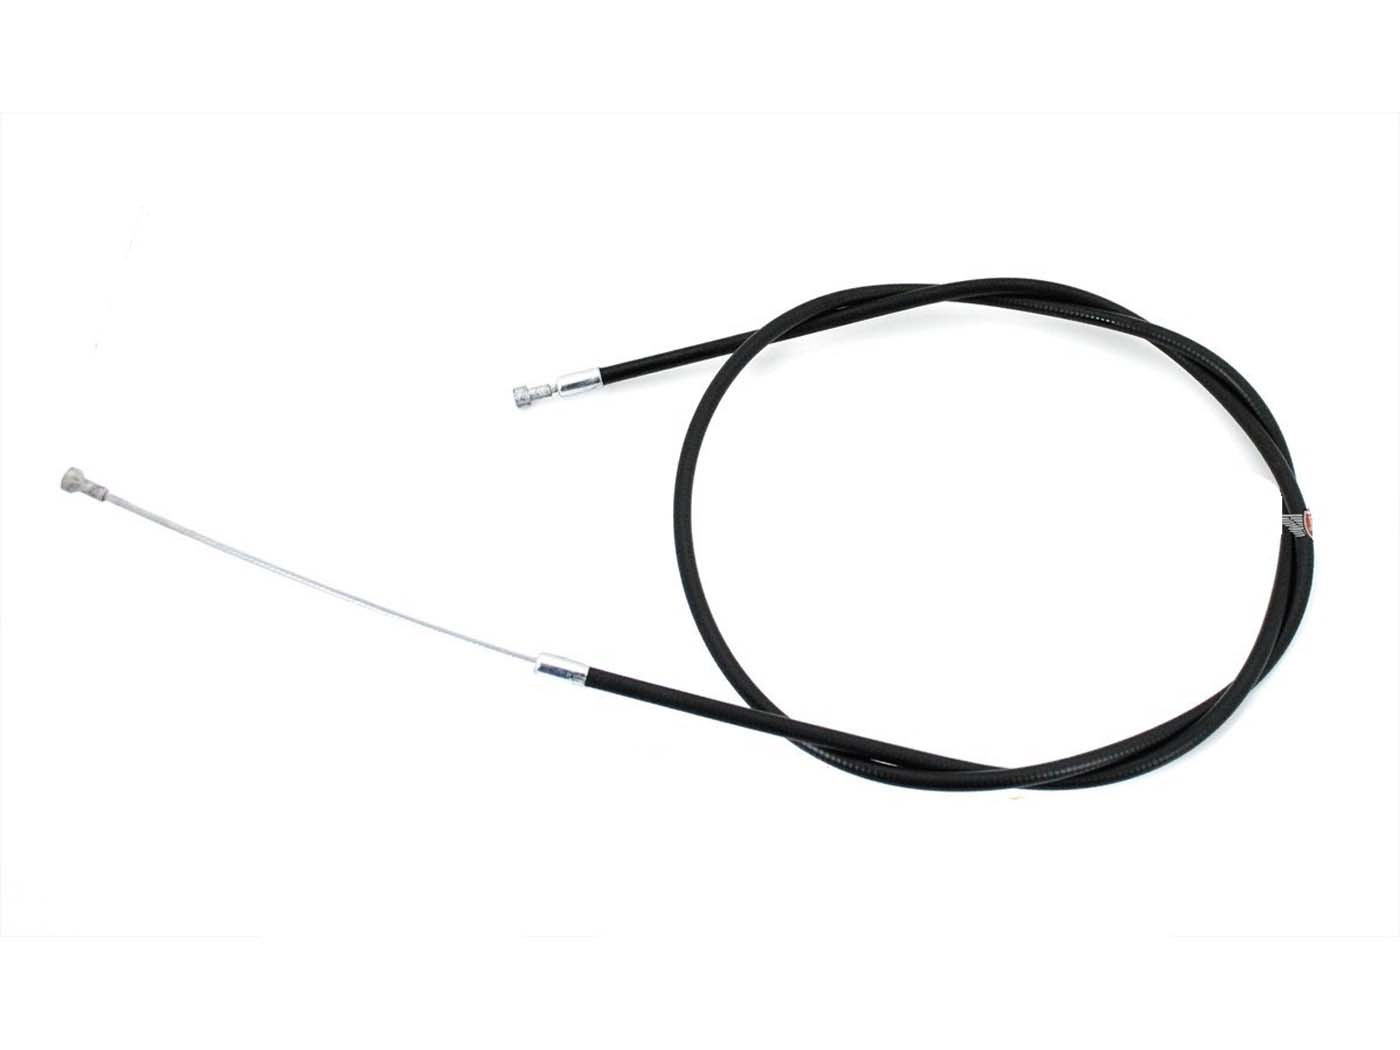 Front Handbrake Cable For Simson S 50, 51, 70, 53, 83 Mokick